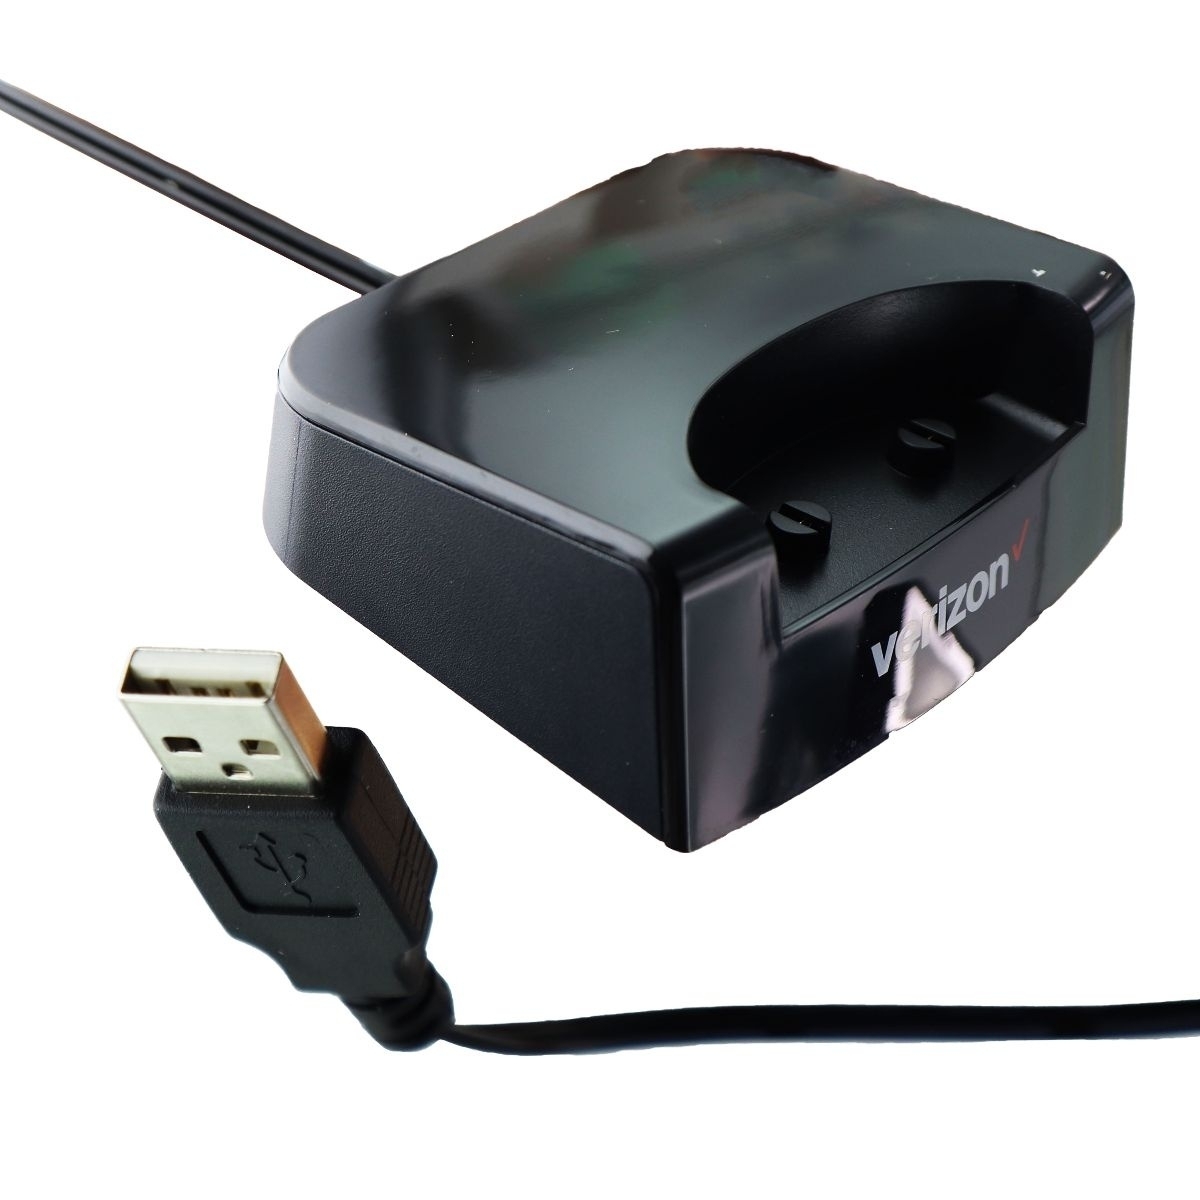 Yealink IP DECT Phone USB Base/Dock - Black W56H